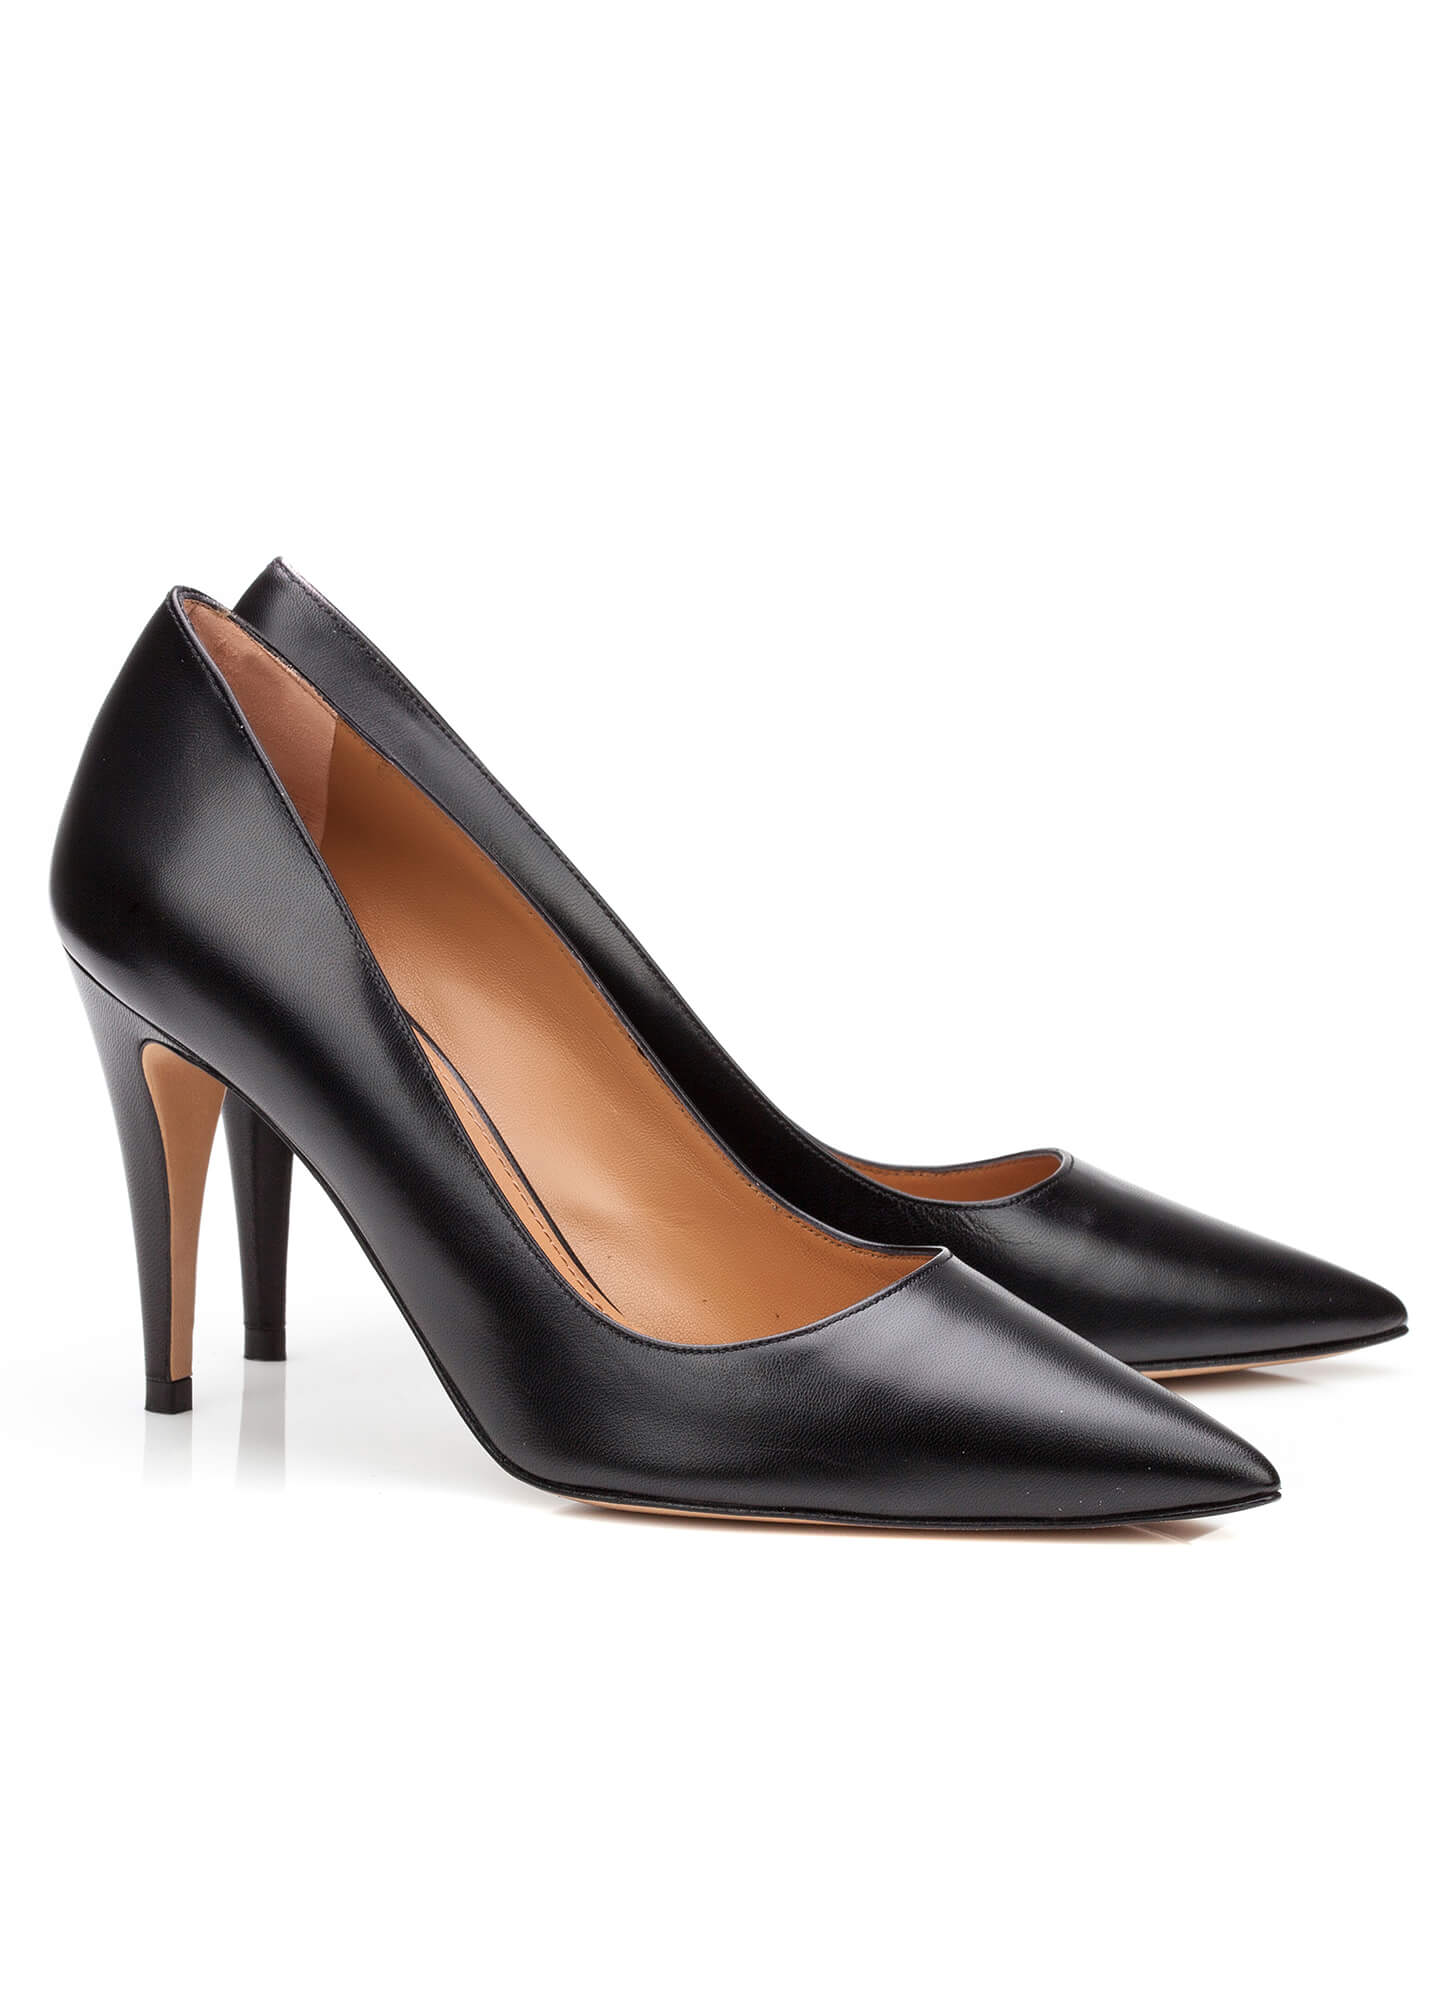 High heel pumps in black leather - online shoe store Pura Lopez . PURA ...